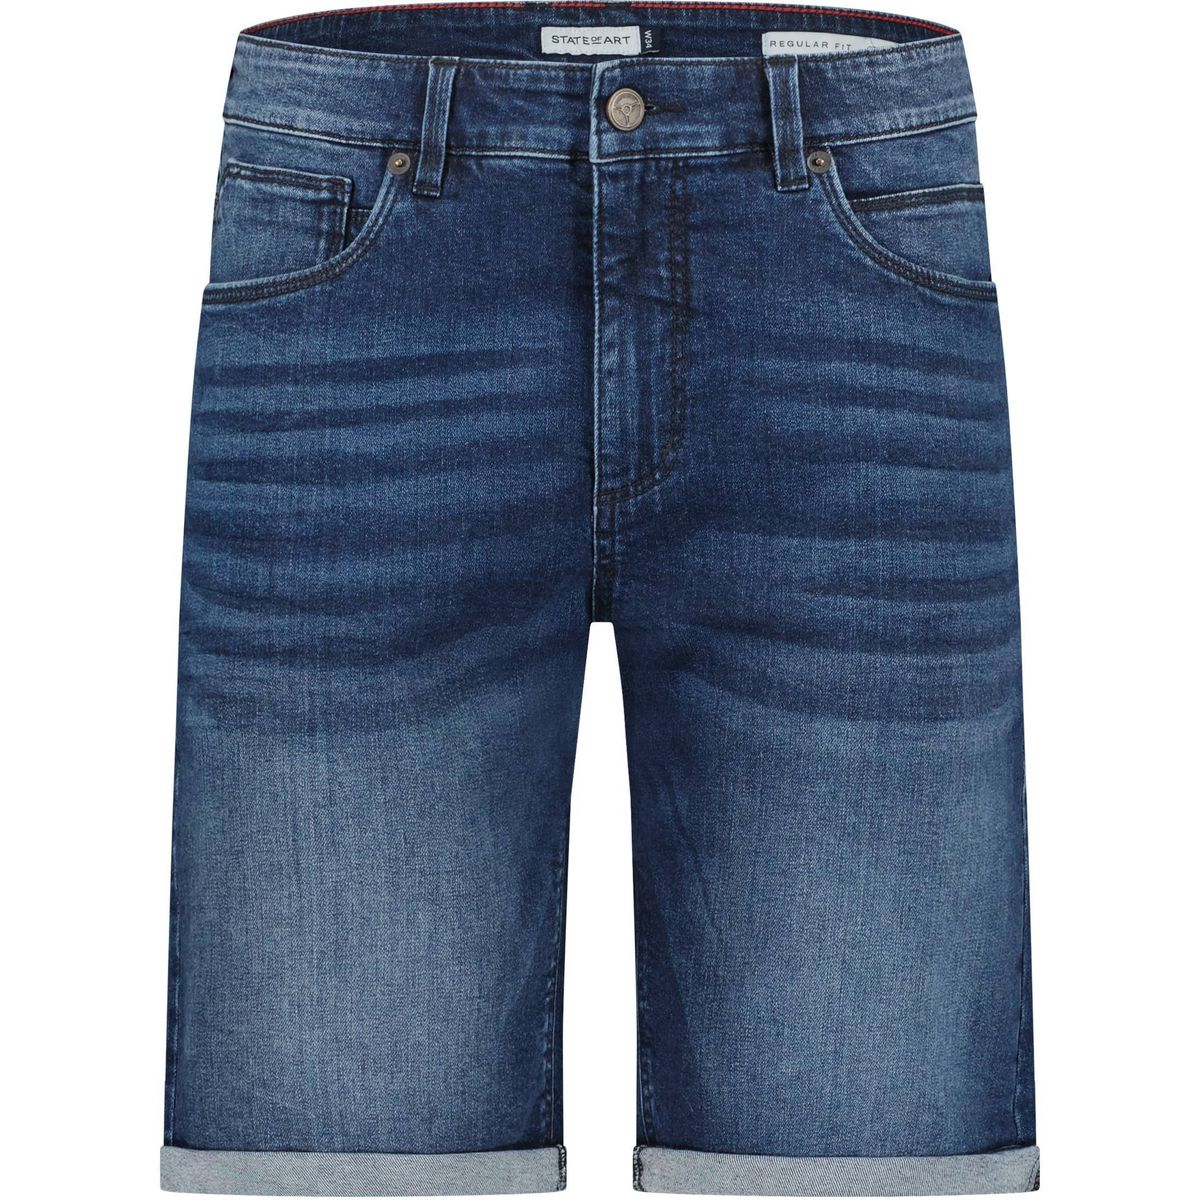 Textiel Heren Broeken / Pantalons State Of Art Denim Shorts Donkerblauw Blauw